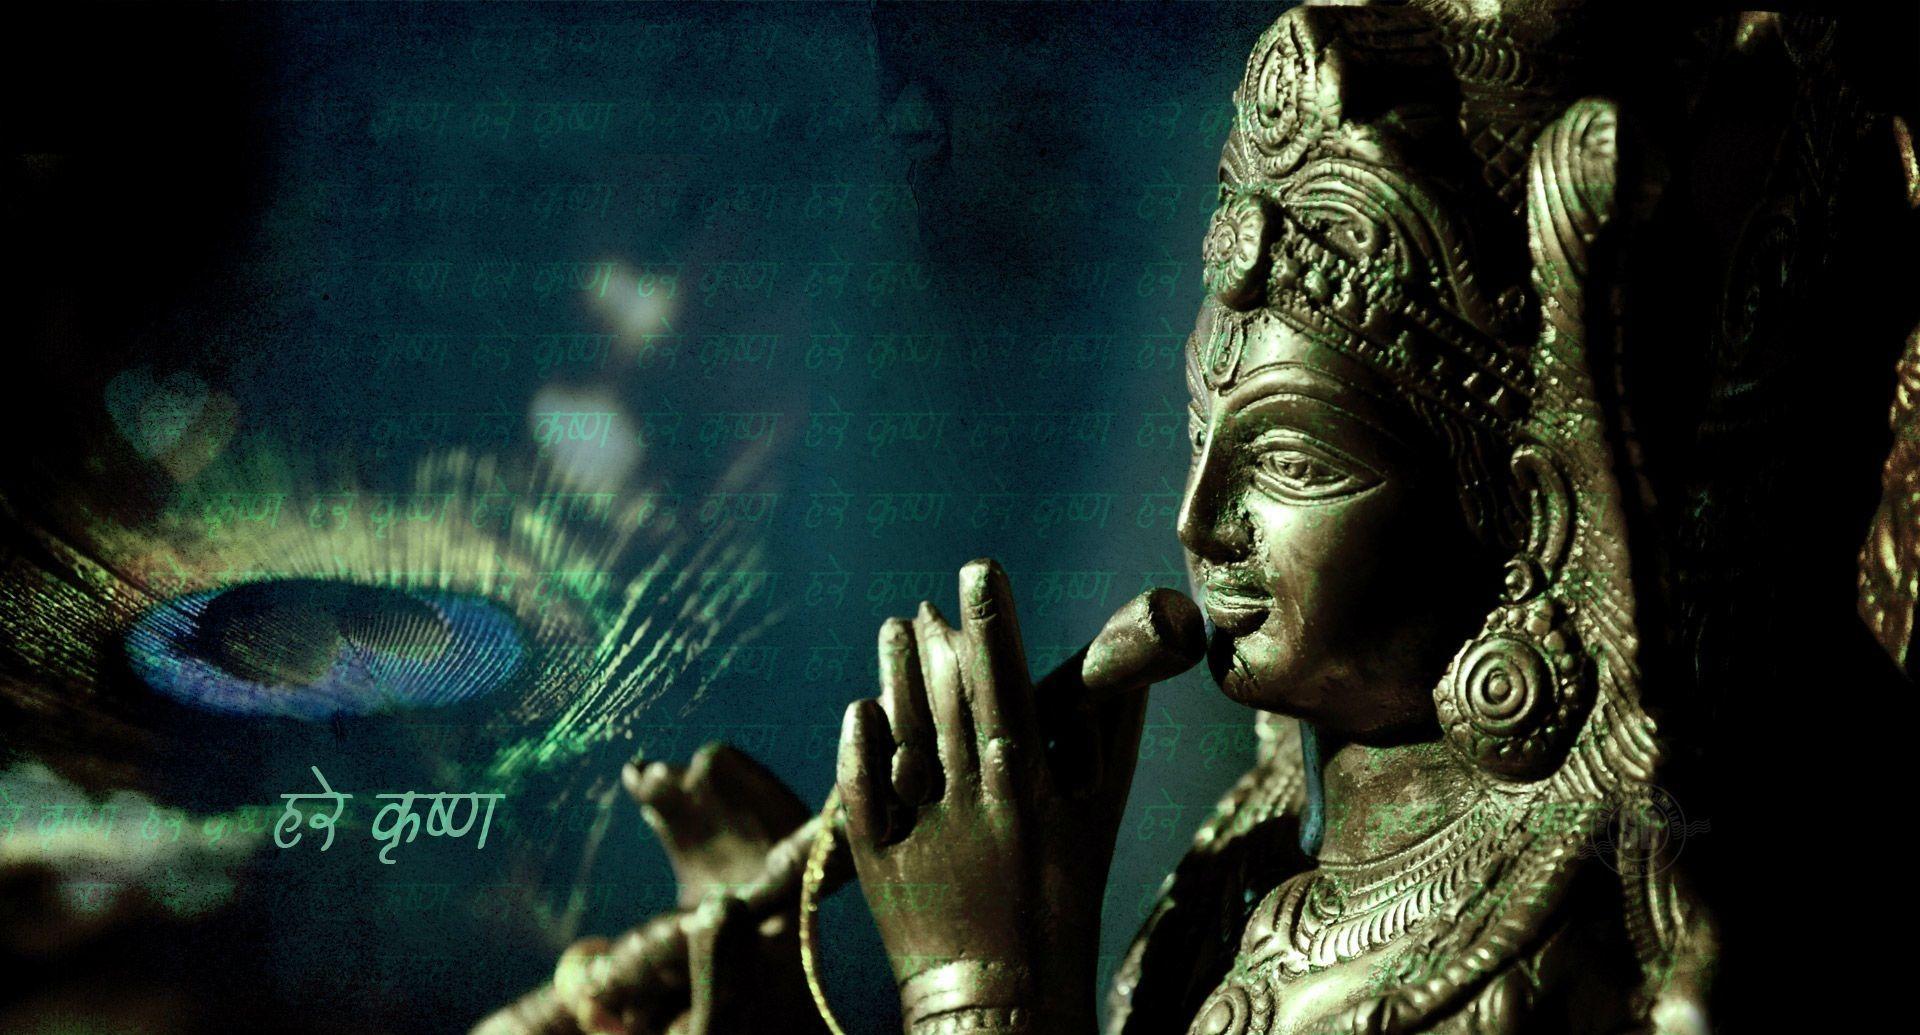 Lord Krishna PC Wallpapers - Top Free Lord Krishna PC Backgrounds -  WallpaperAccess